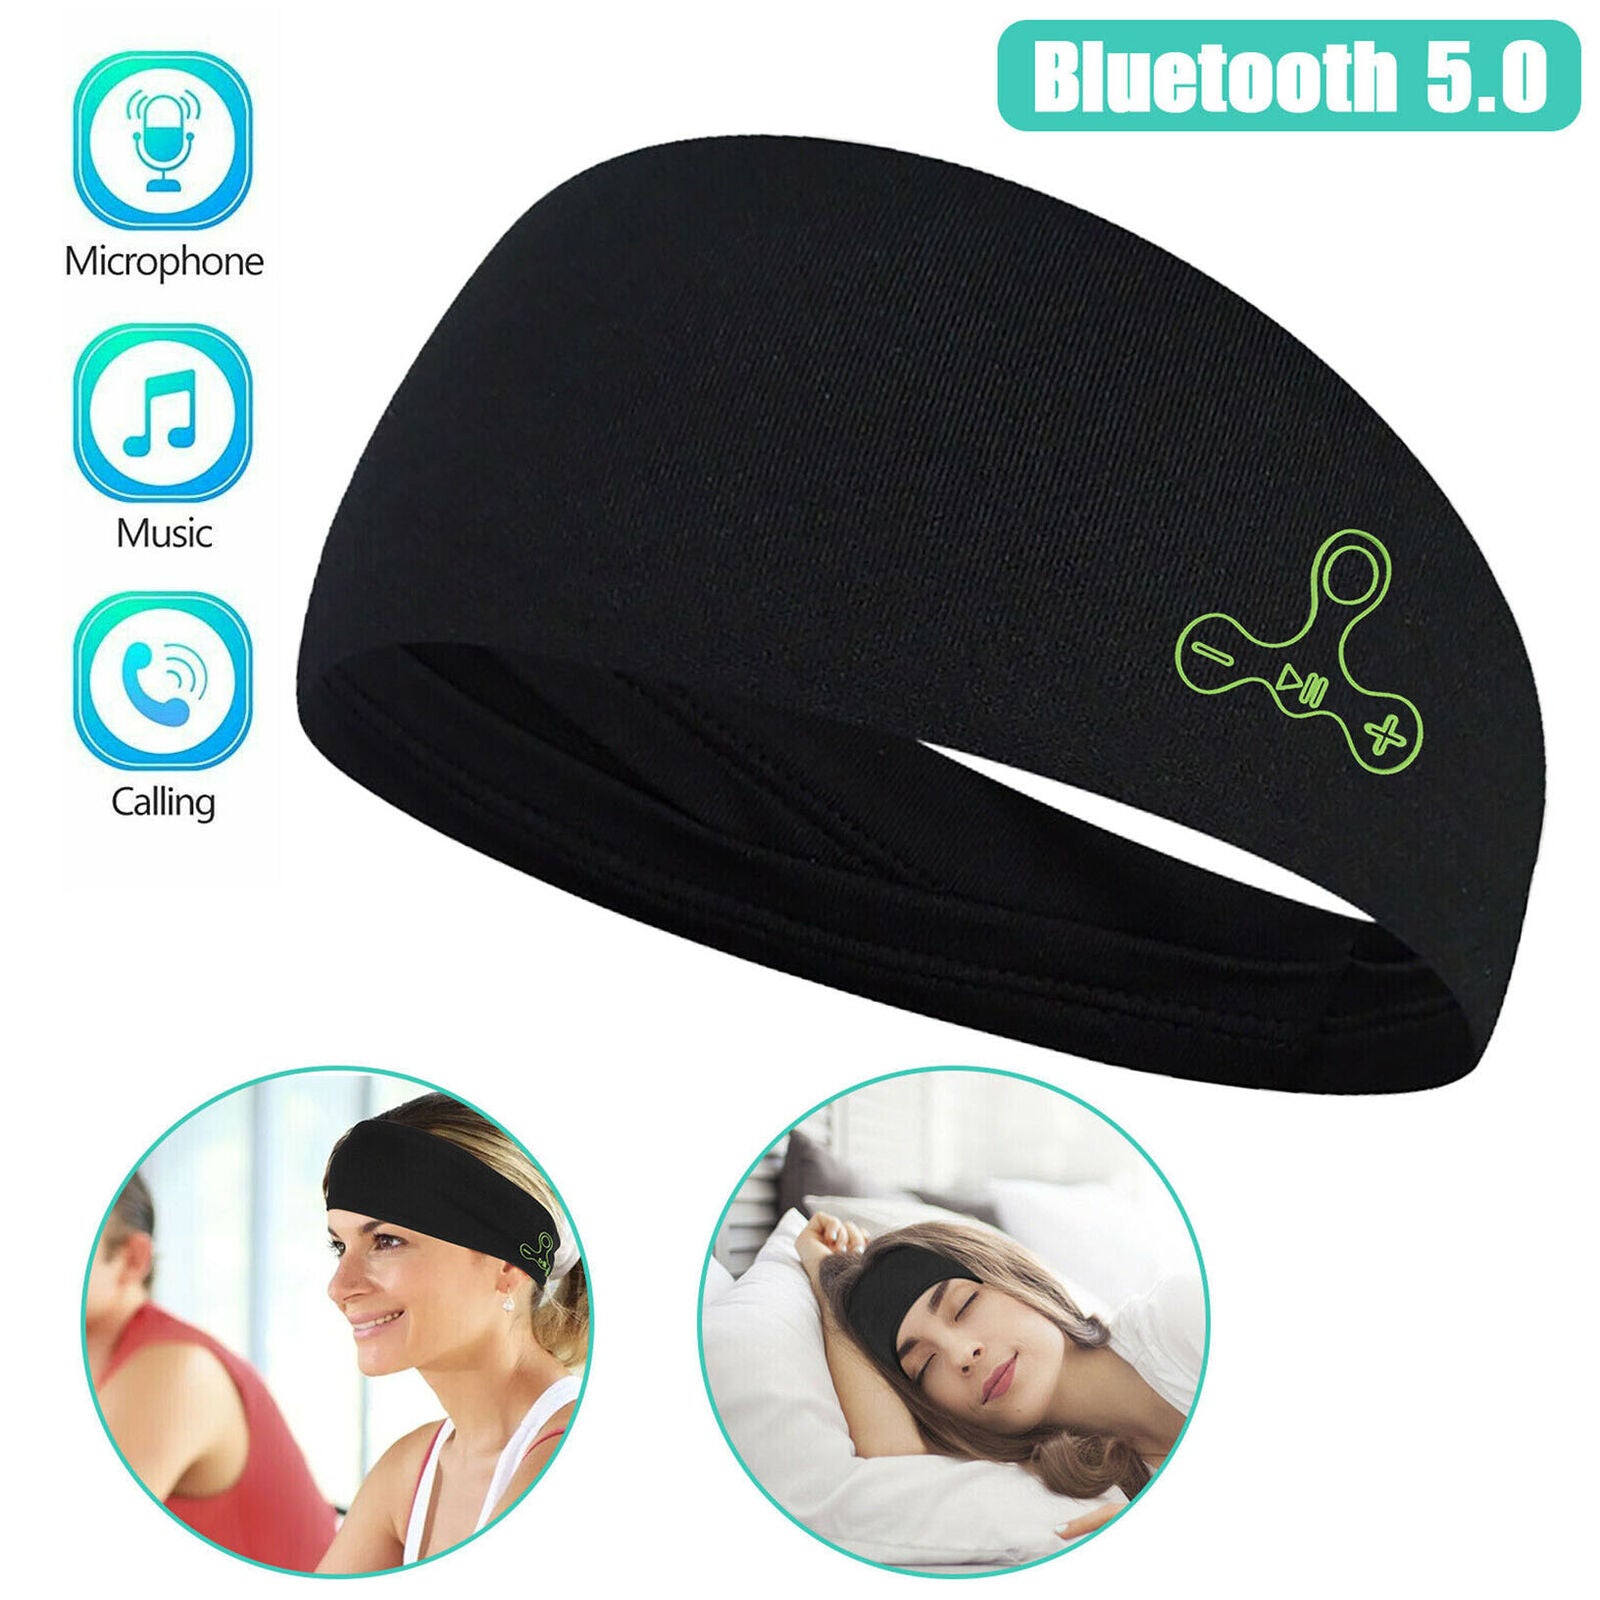 Bluetooth 5.0 Sports Stereo Wireless Headband Headphones Run Sleep Music Headset